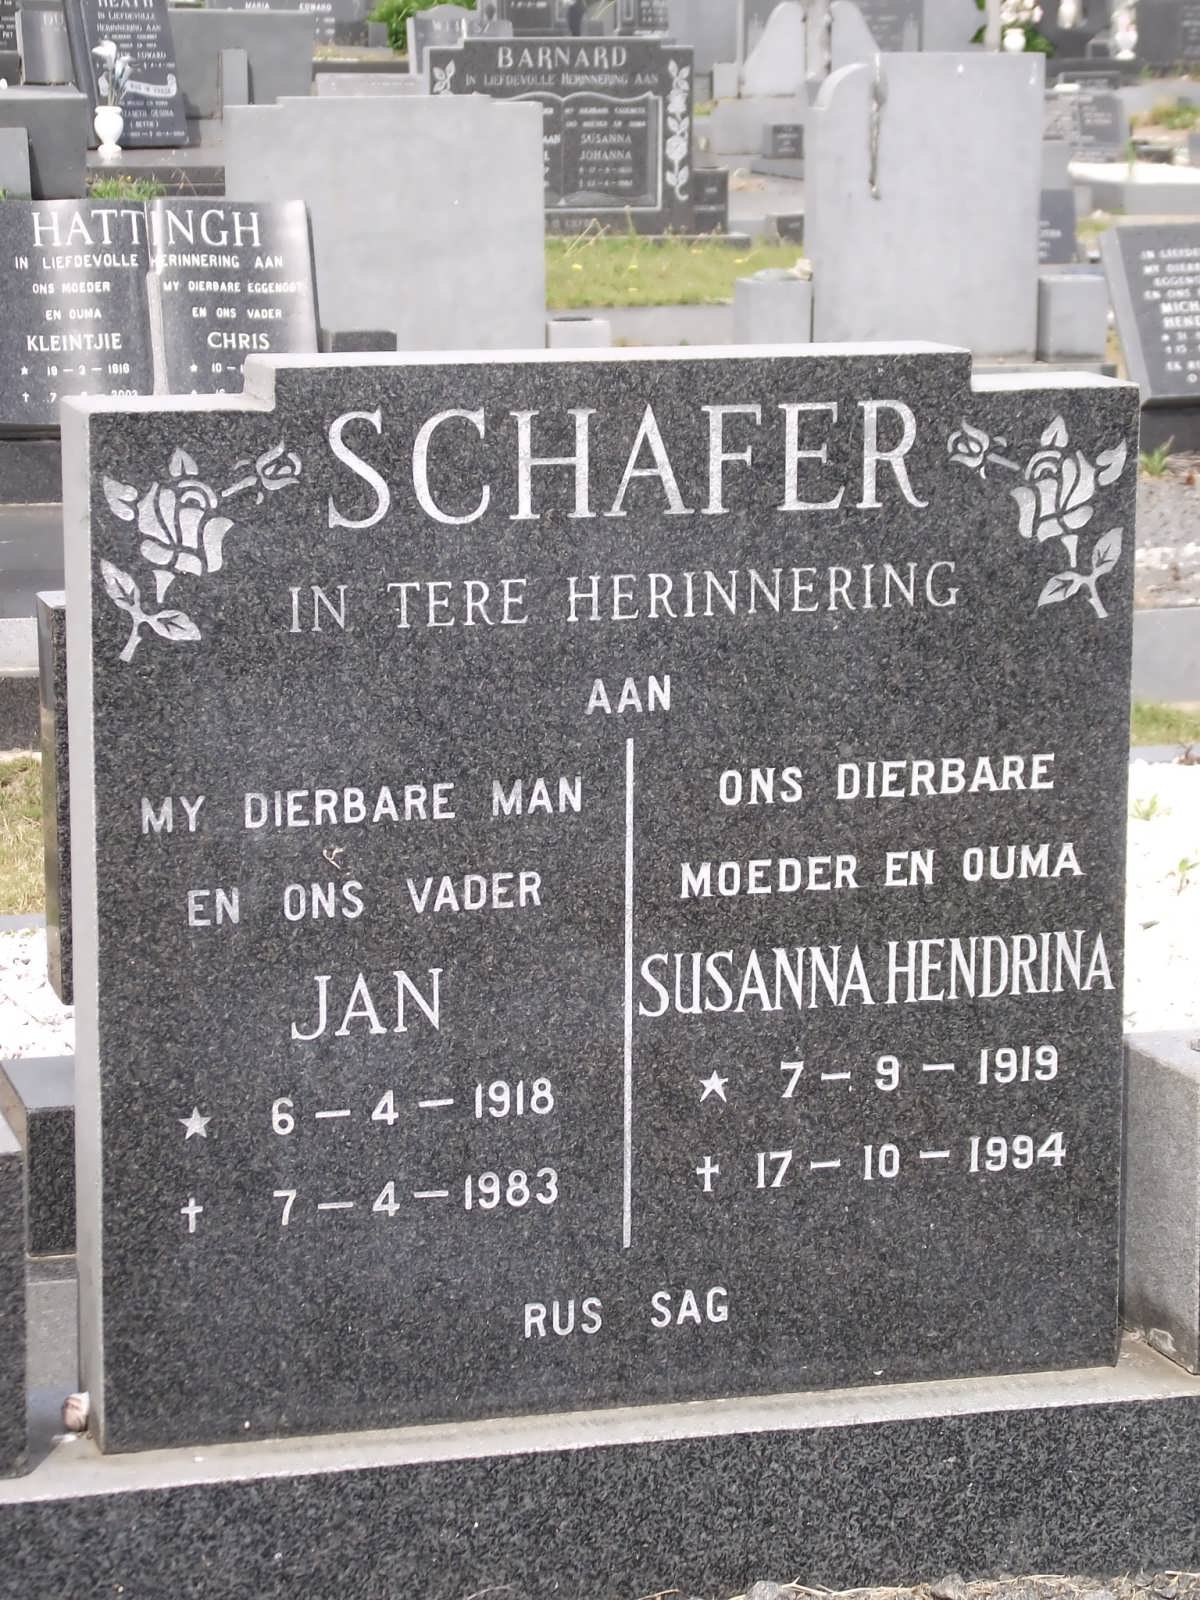 SCHAFER Jan 1918-1983 & Susanna Hendrina 1919-1994